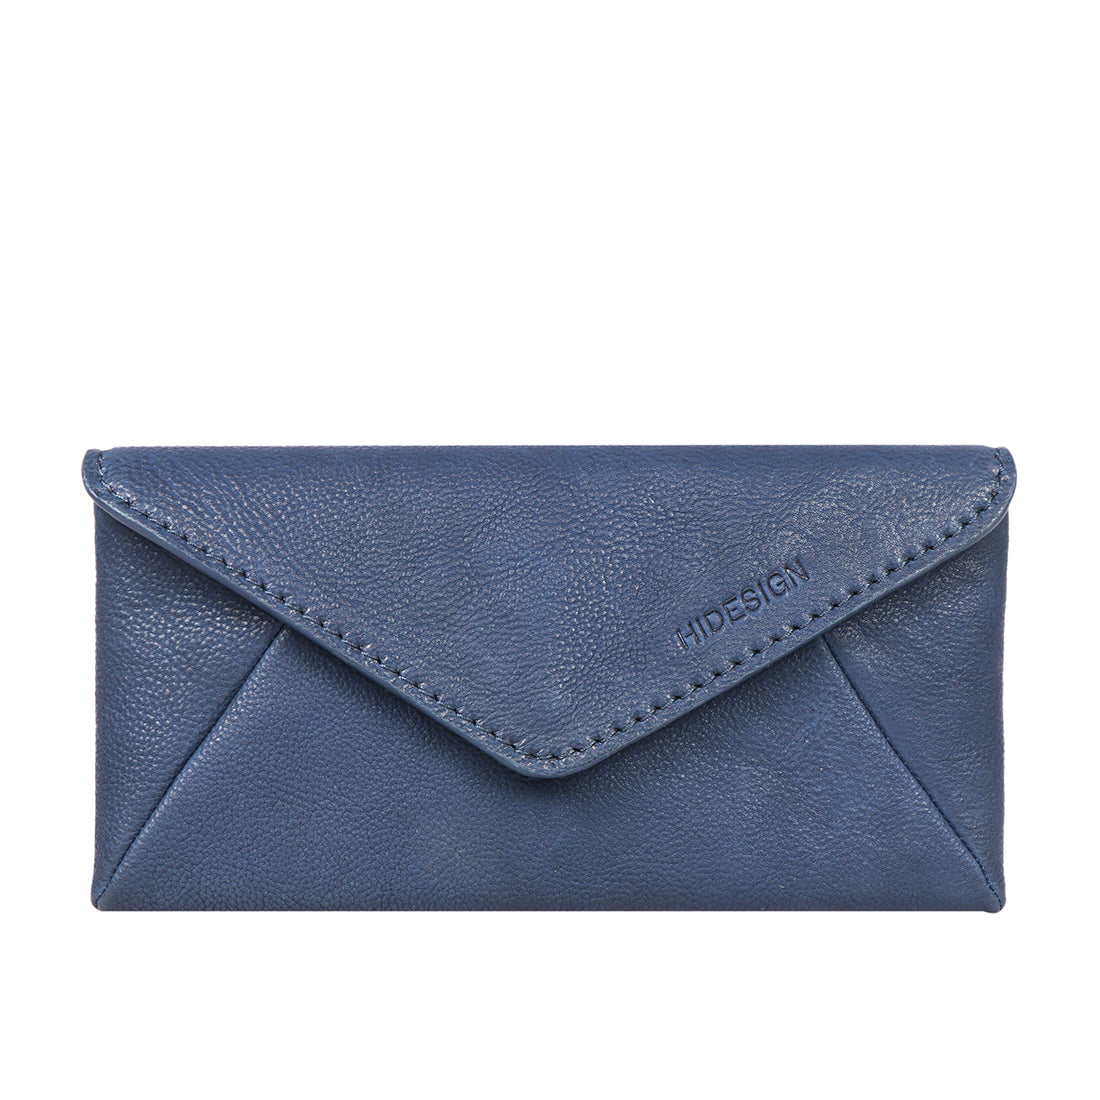 HIDESIGN | Ostrich leather, Women handbags, Sling bag